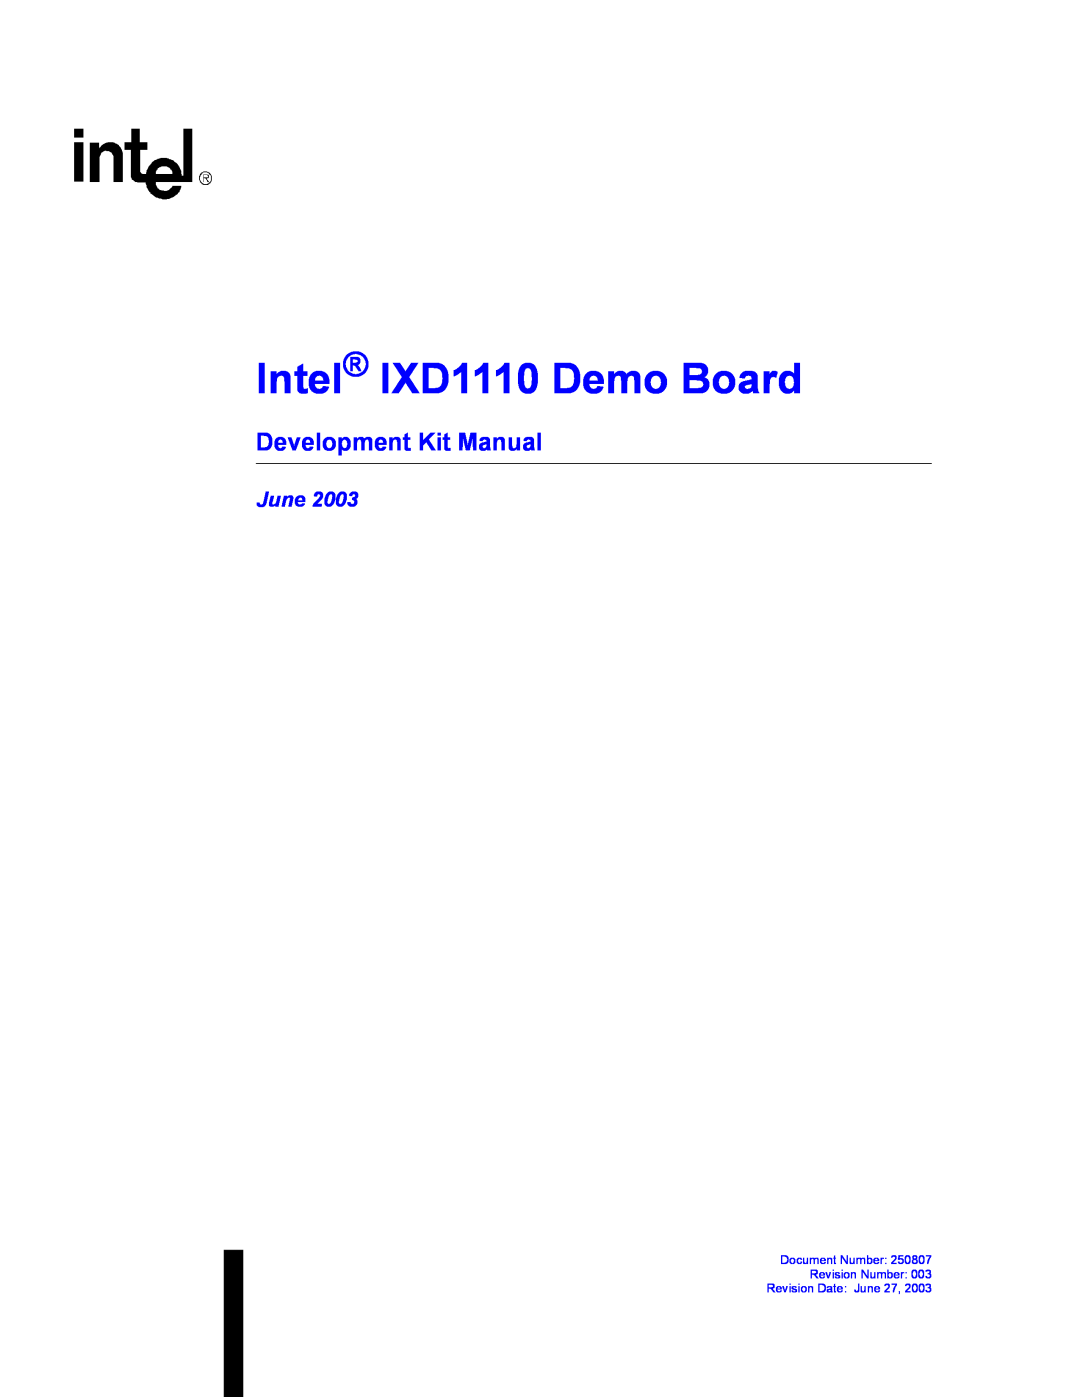 Intel manual Development Kit Manual, Intel IXD1110 Demo Board, June 